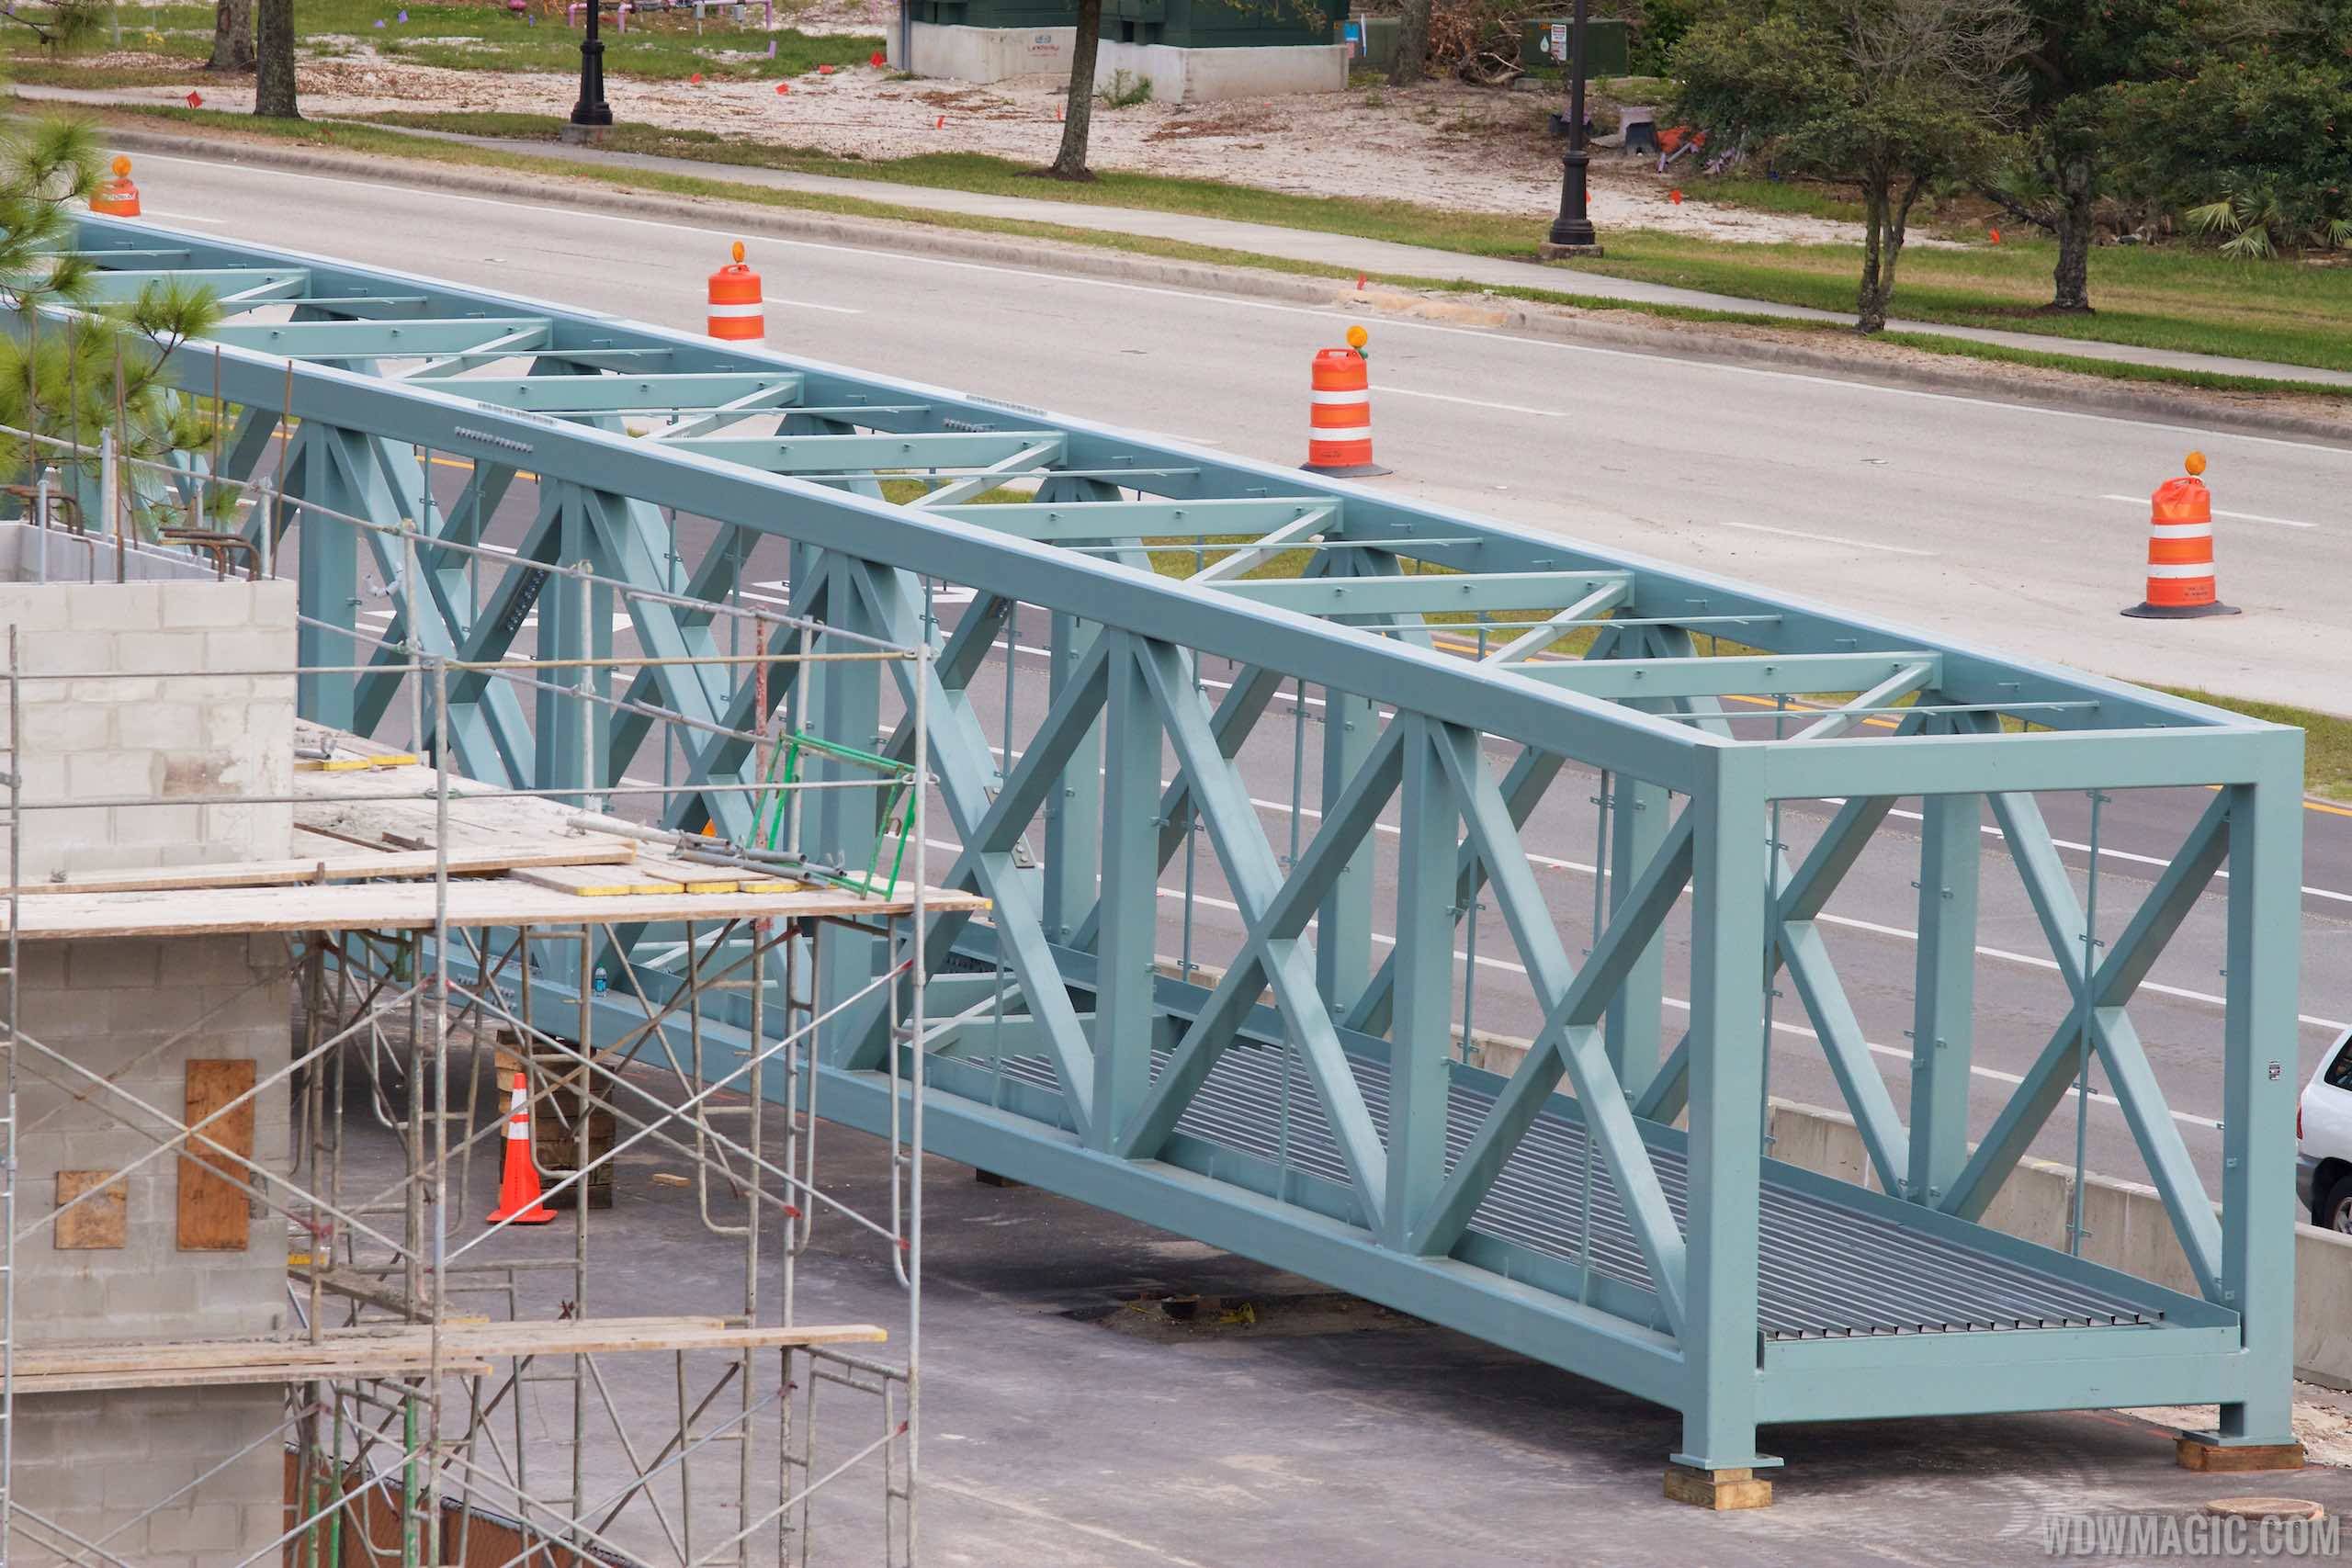 PHOTOS - Pedestrian Bridge for Buena Vista Drive arrives at the construction site